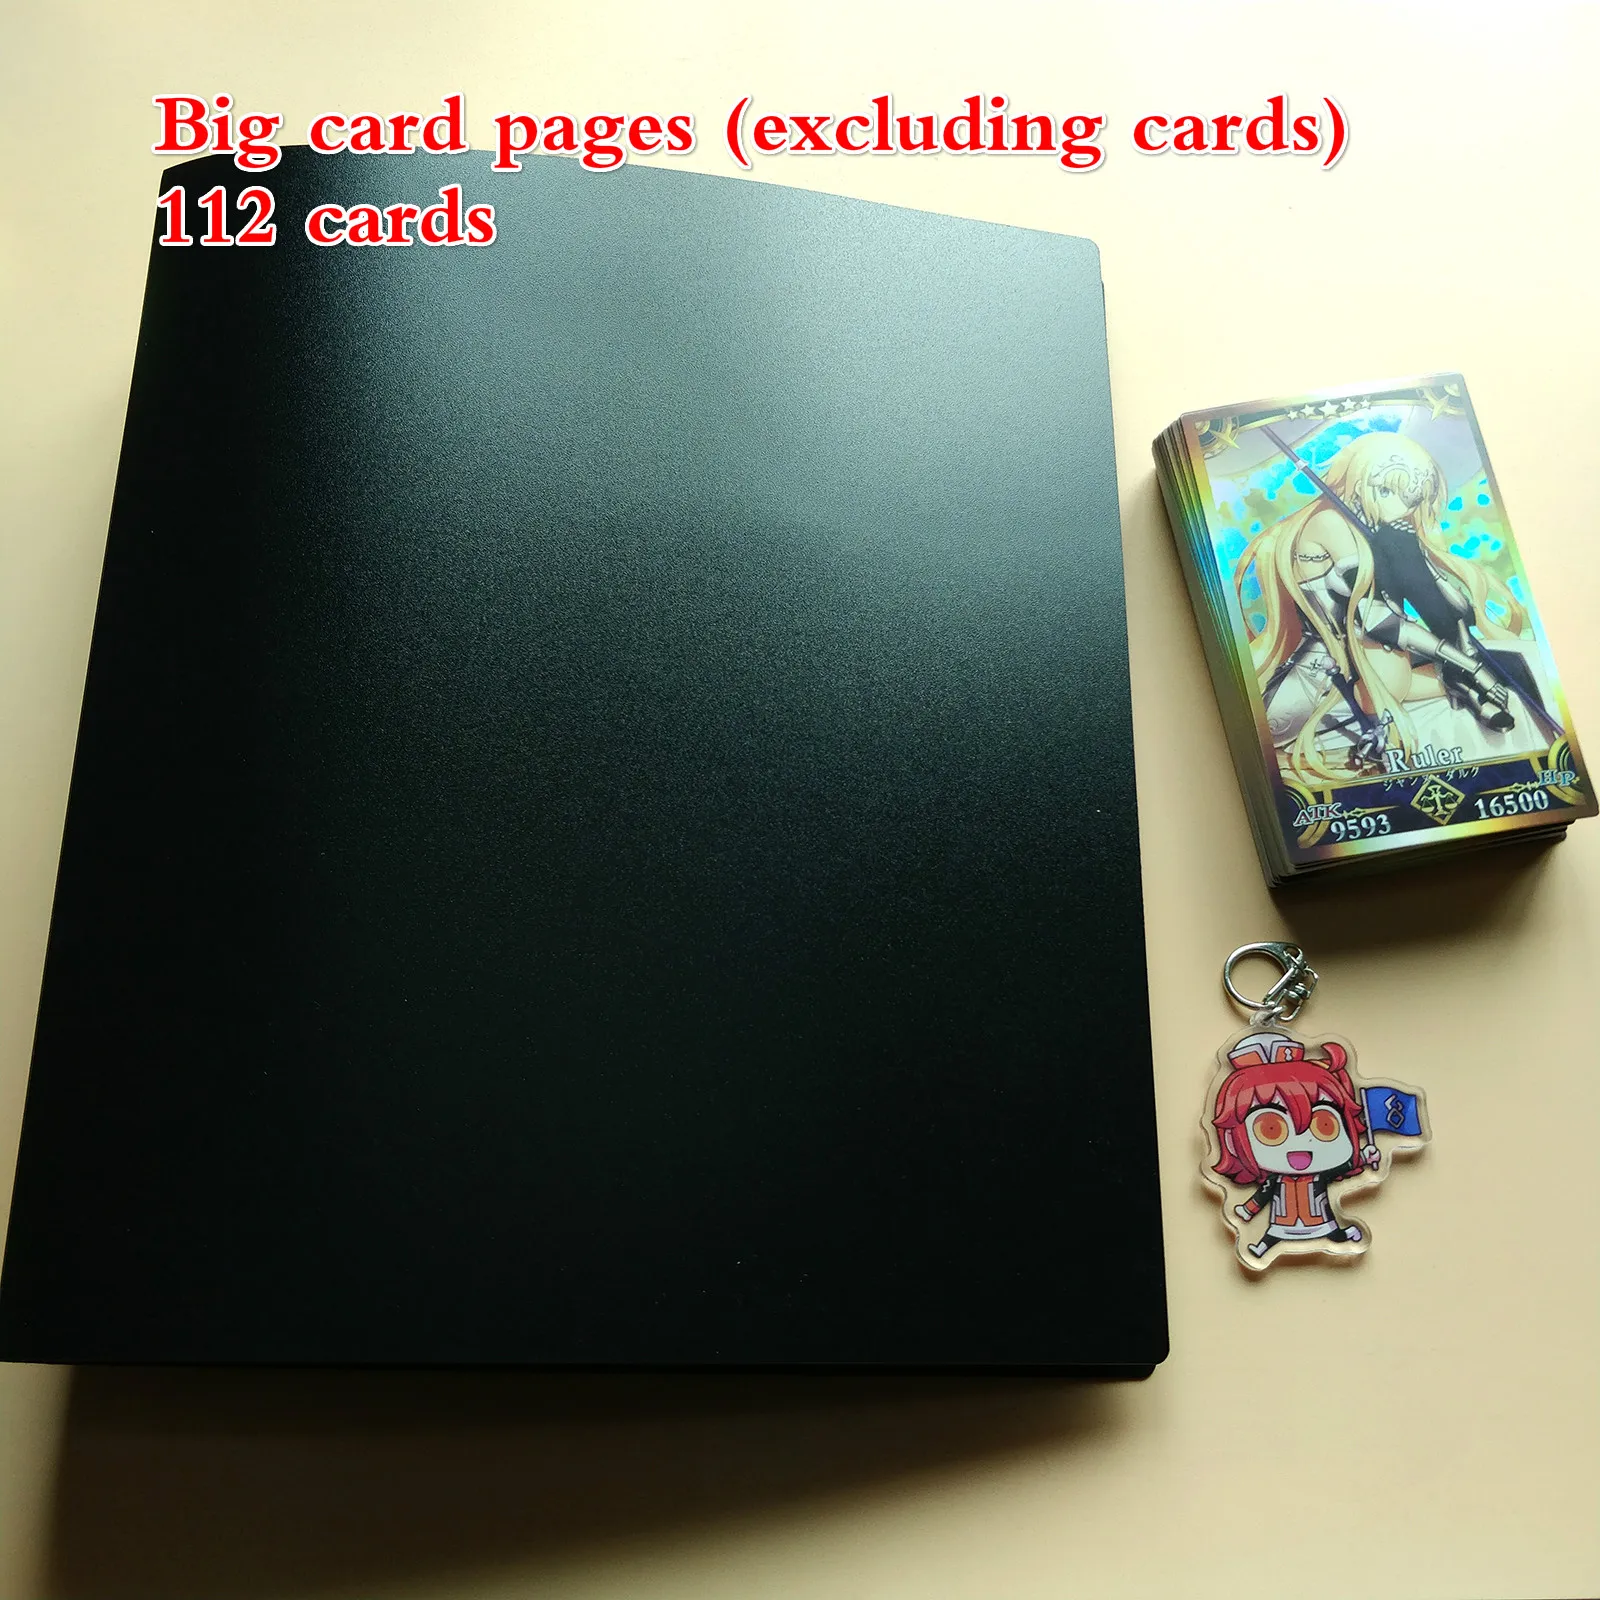 Fate/Grand Card Collector Order Игрушки Хобби Коллекционные игрушки Коллекция игр аниме-открытки - Цвет: hei